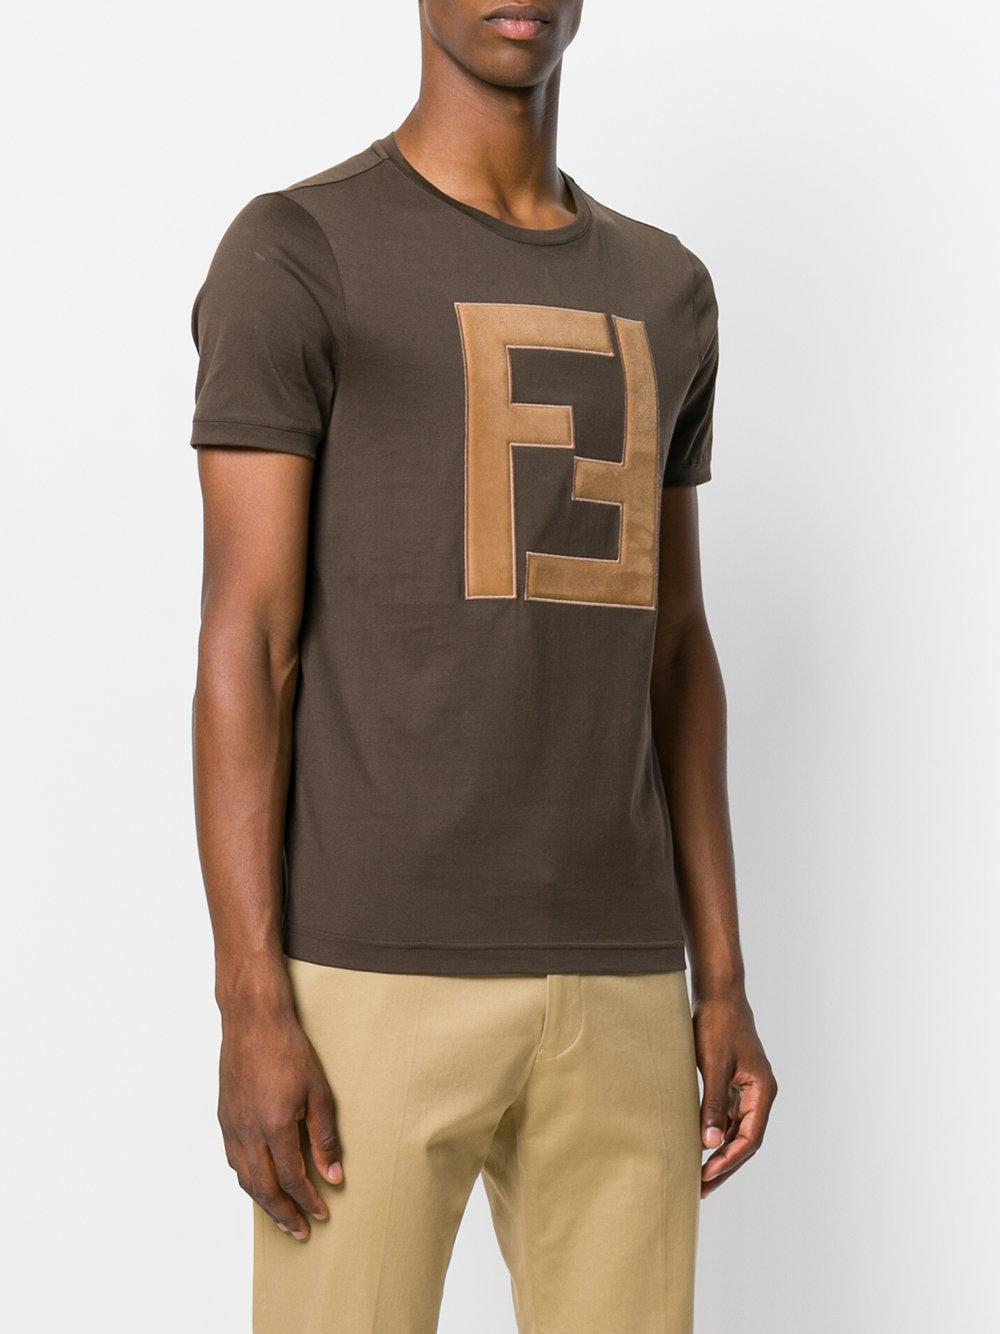 Lyst - Fendi Ff Logo T-shirt in Brown for Men